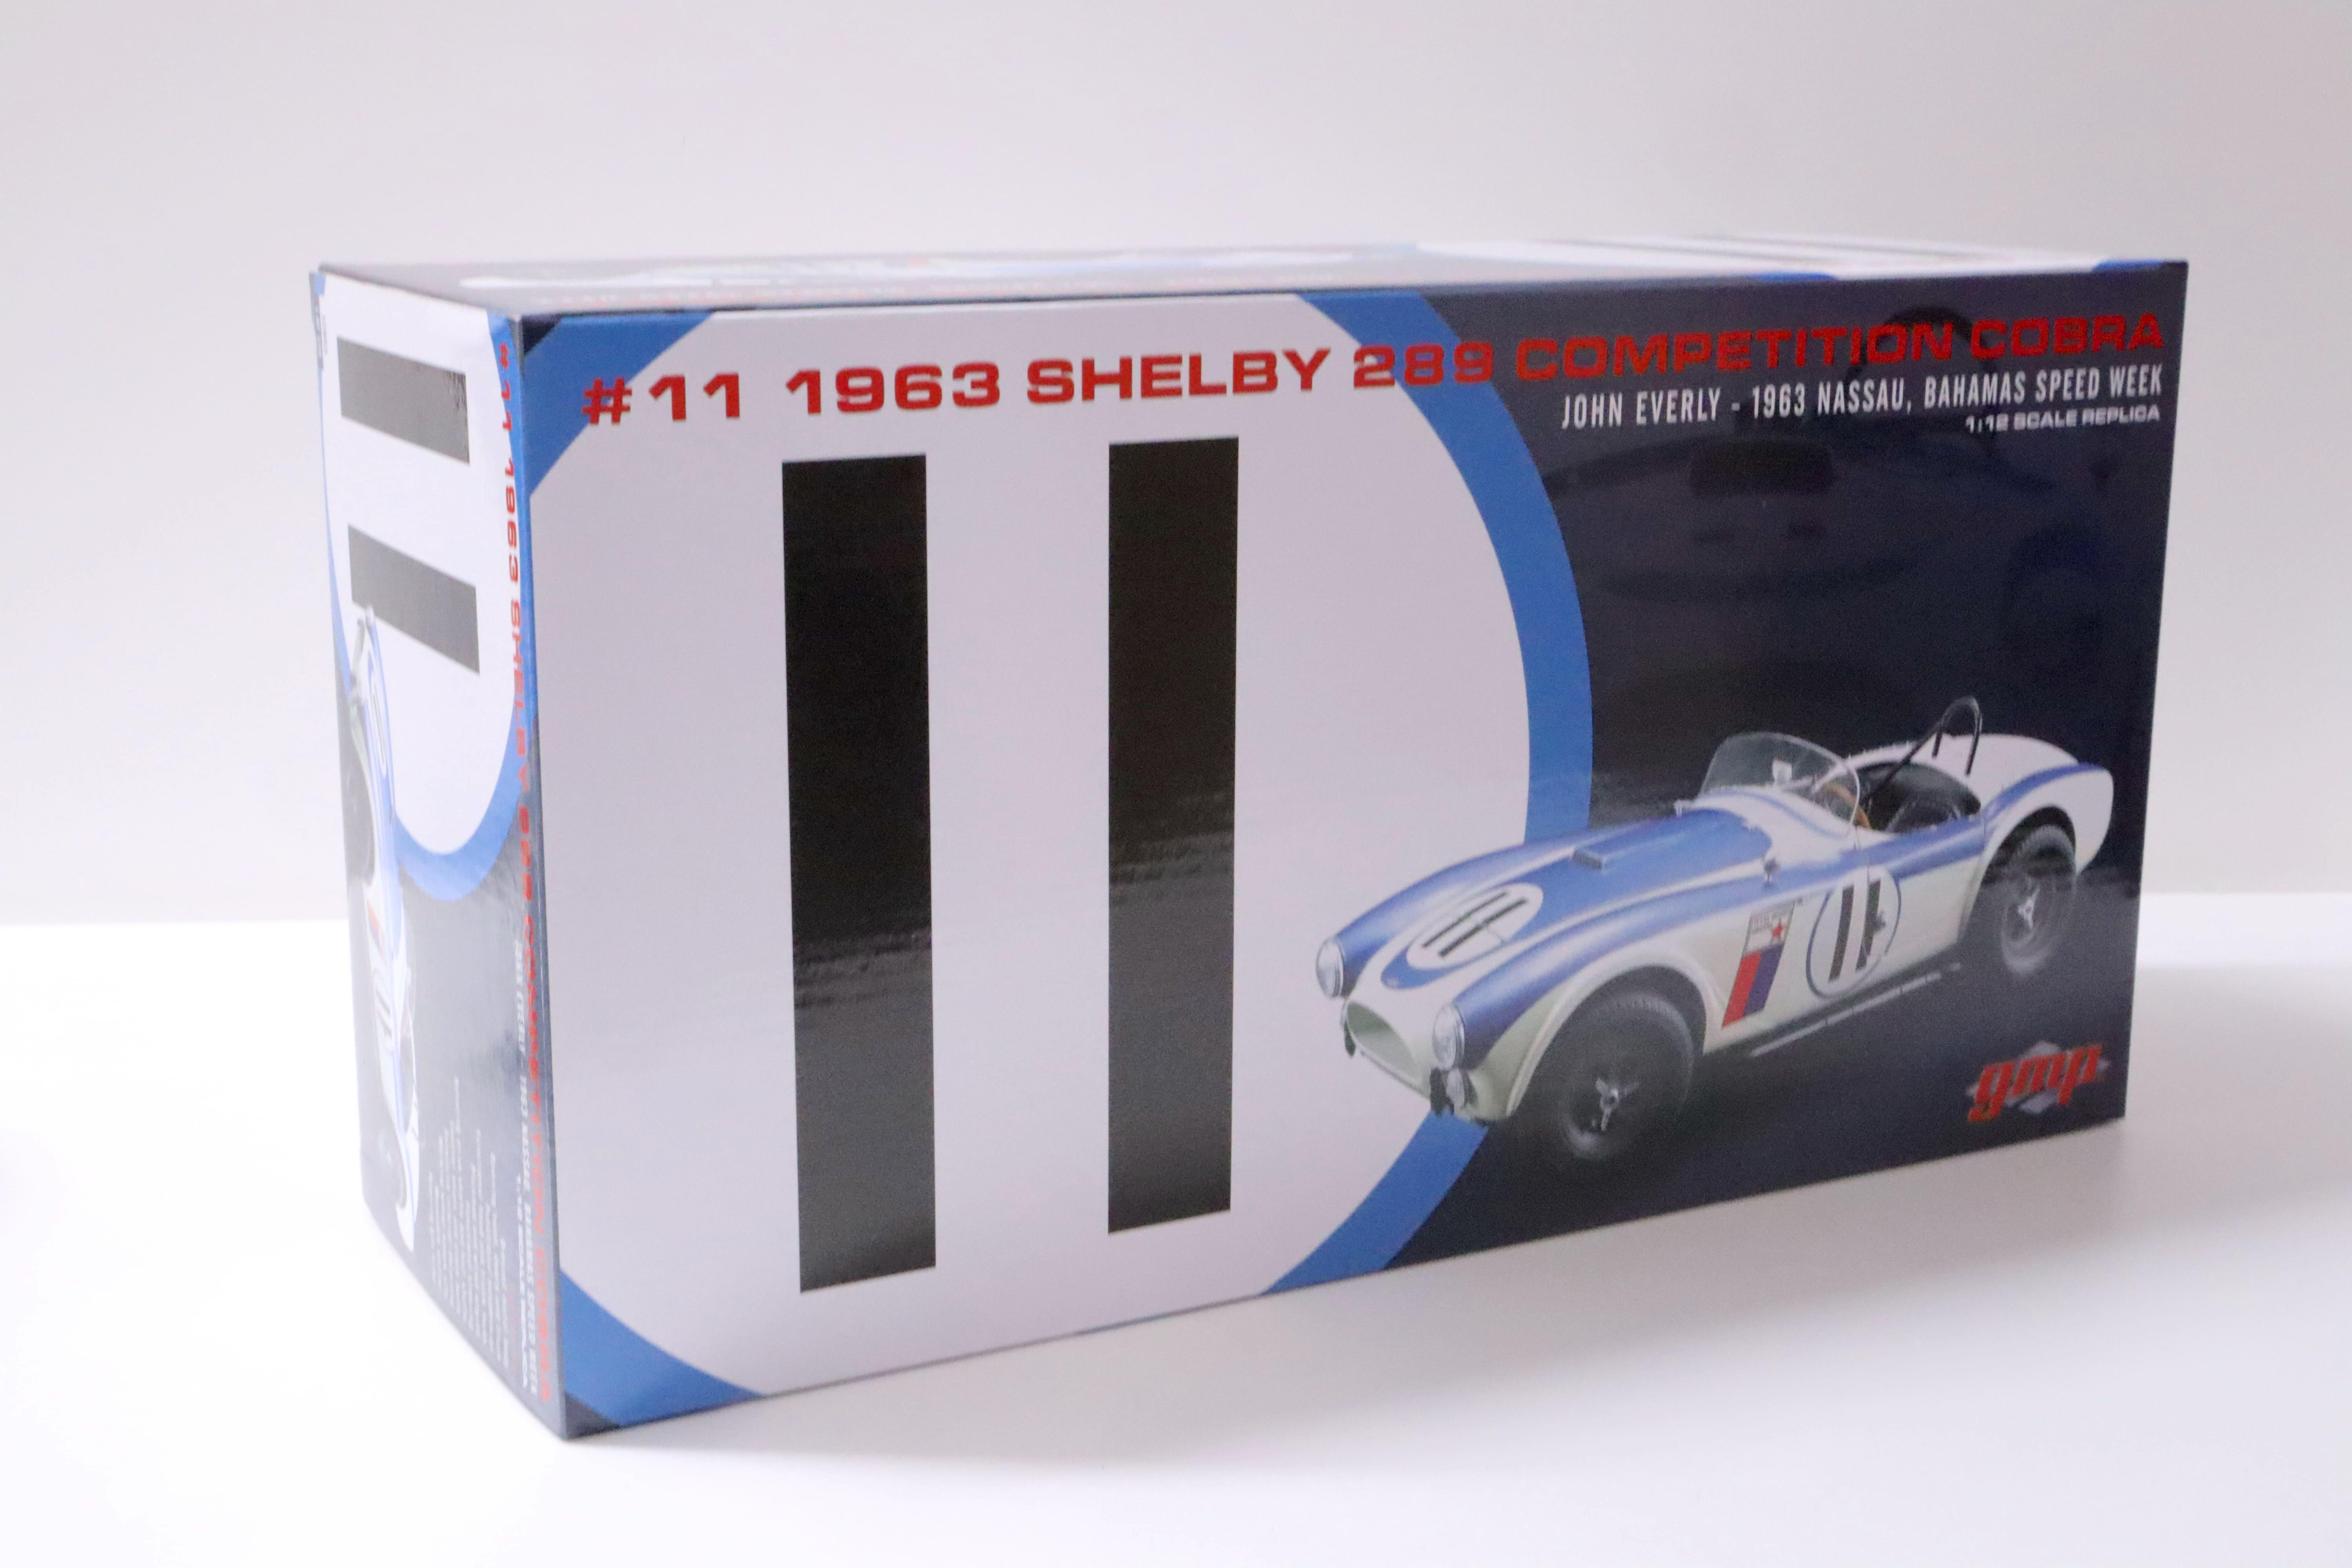 1:12 GMP 1963 Shelby 289 Competition Cobra Nassau Speed Week #11 John Everly